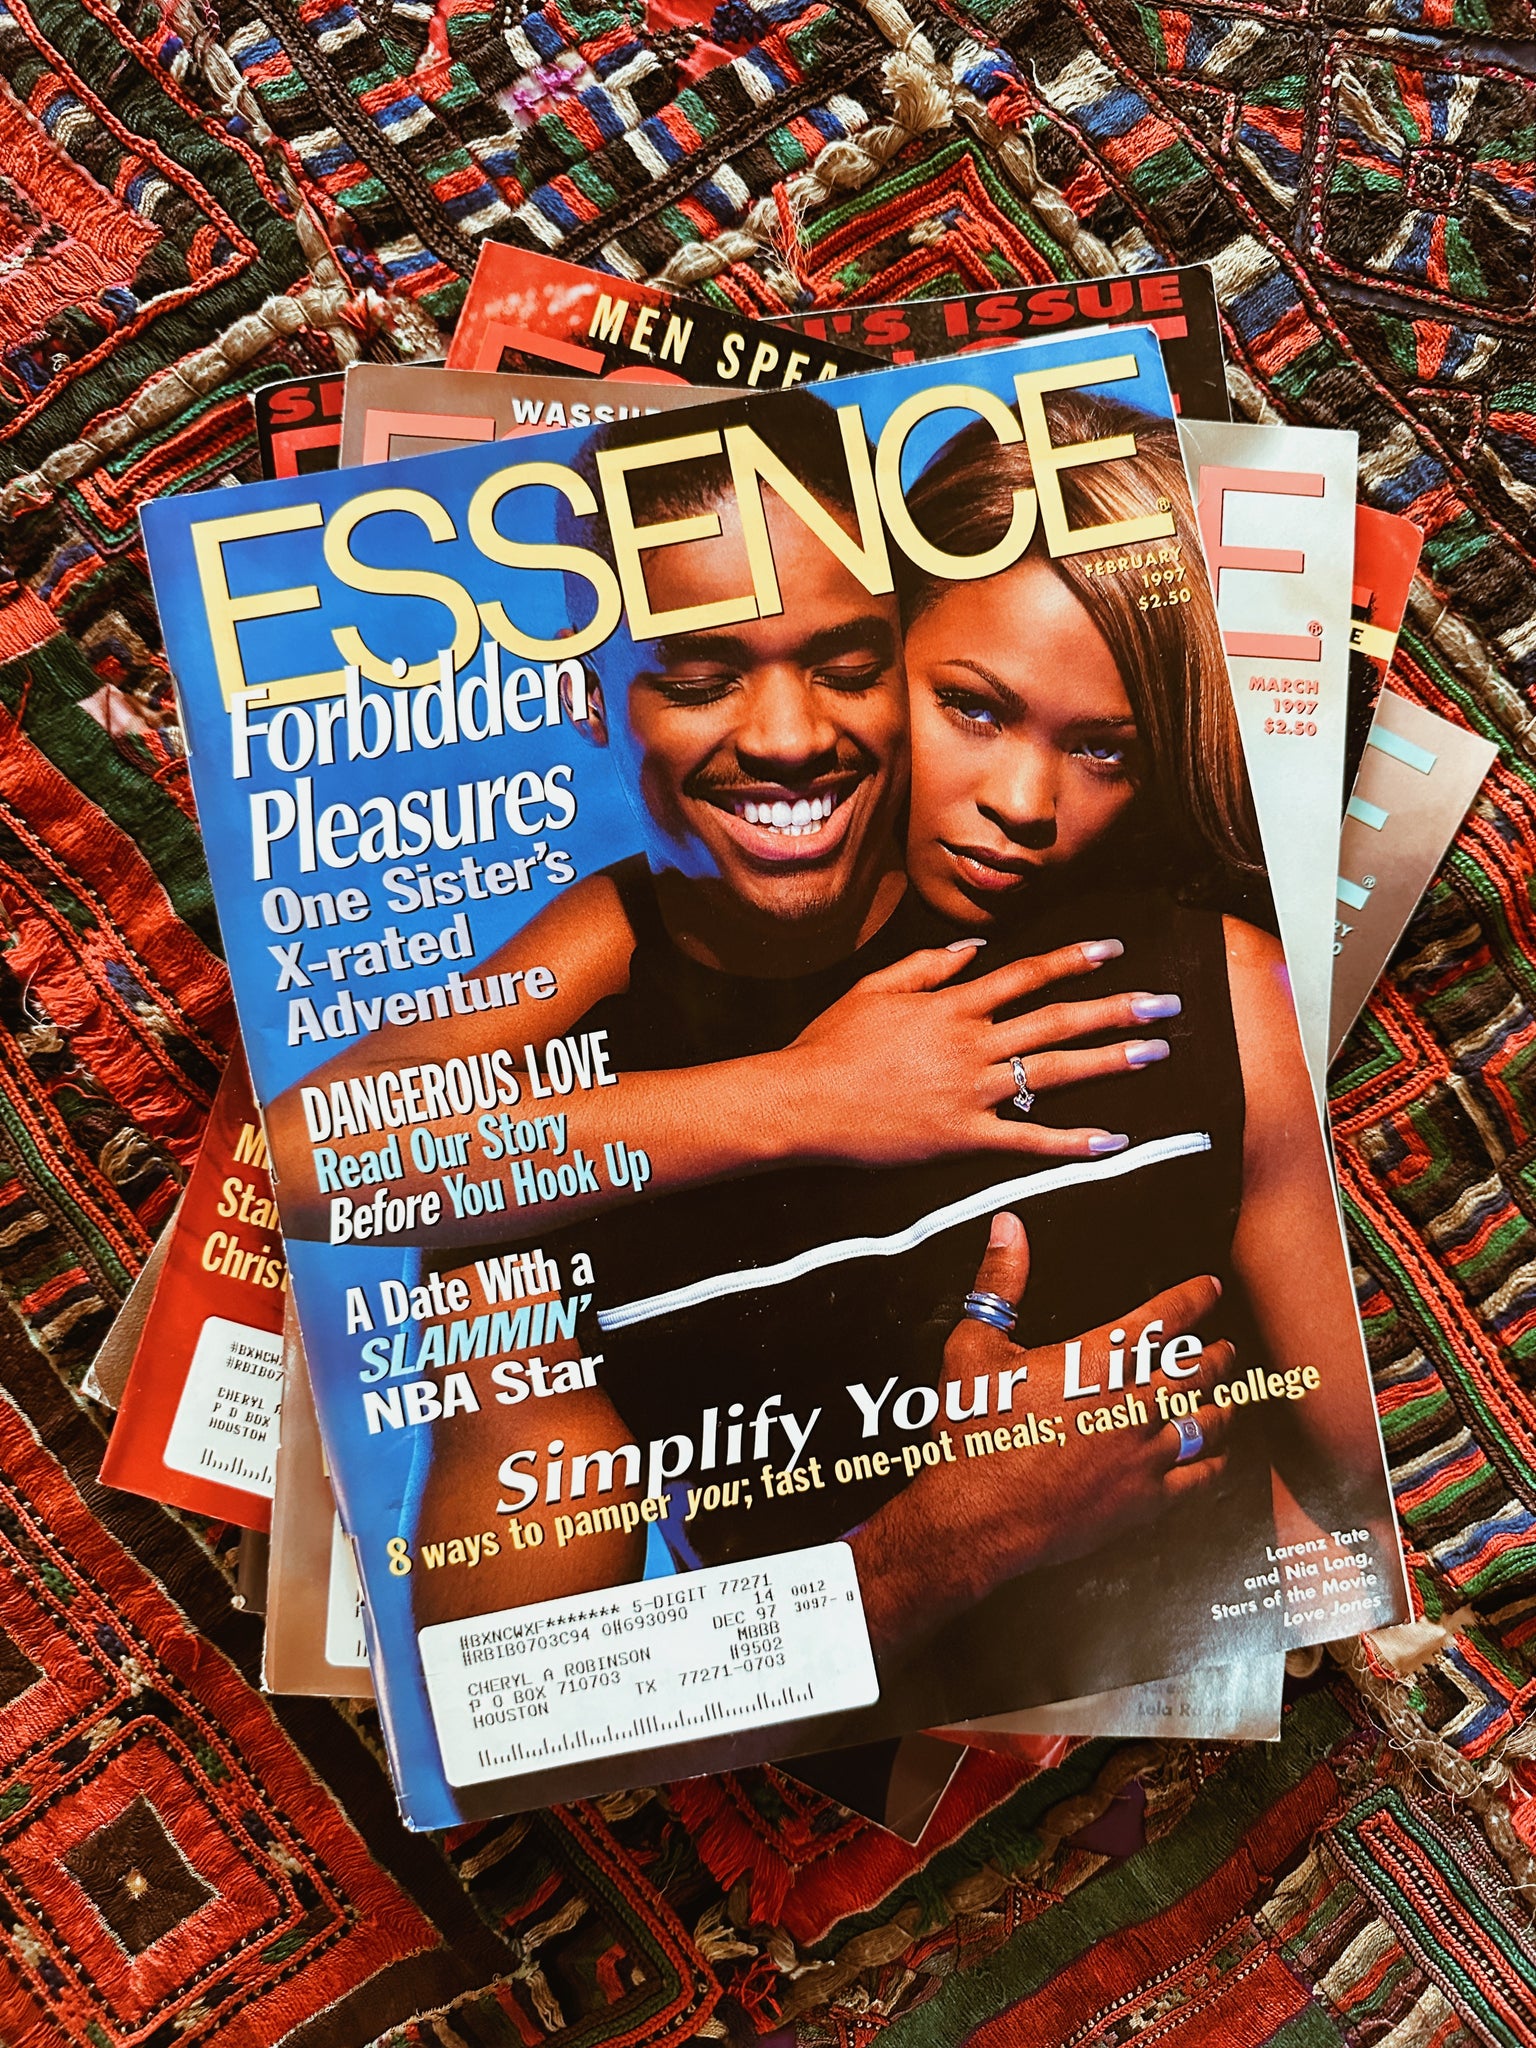 Vintage Essence Magazines (Please Select)